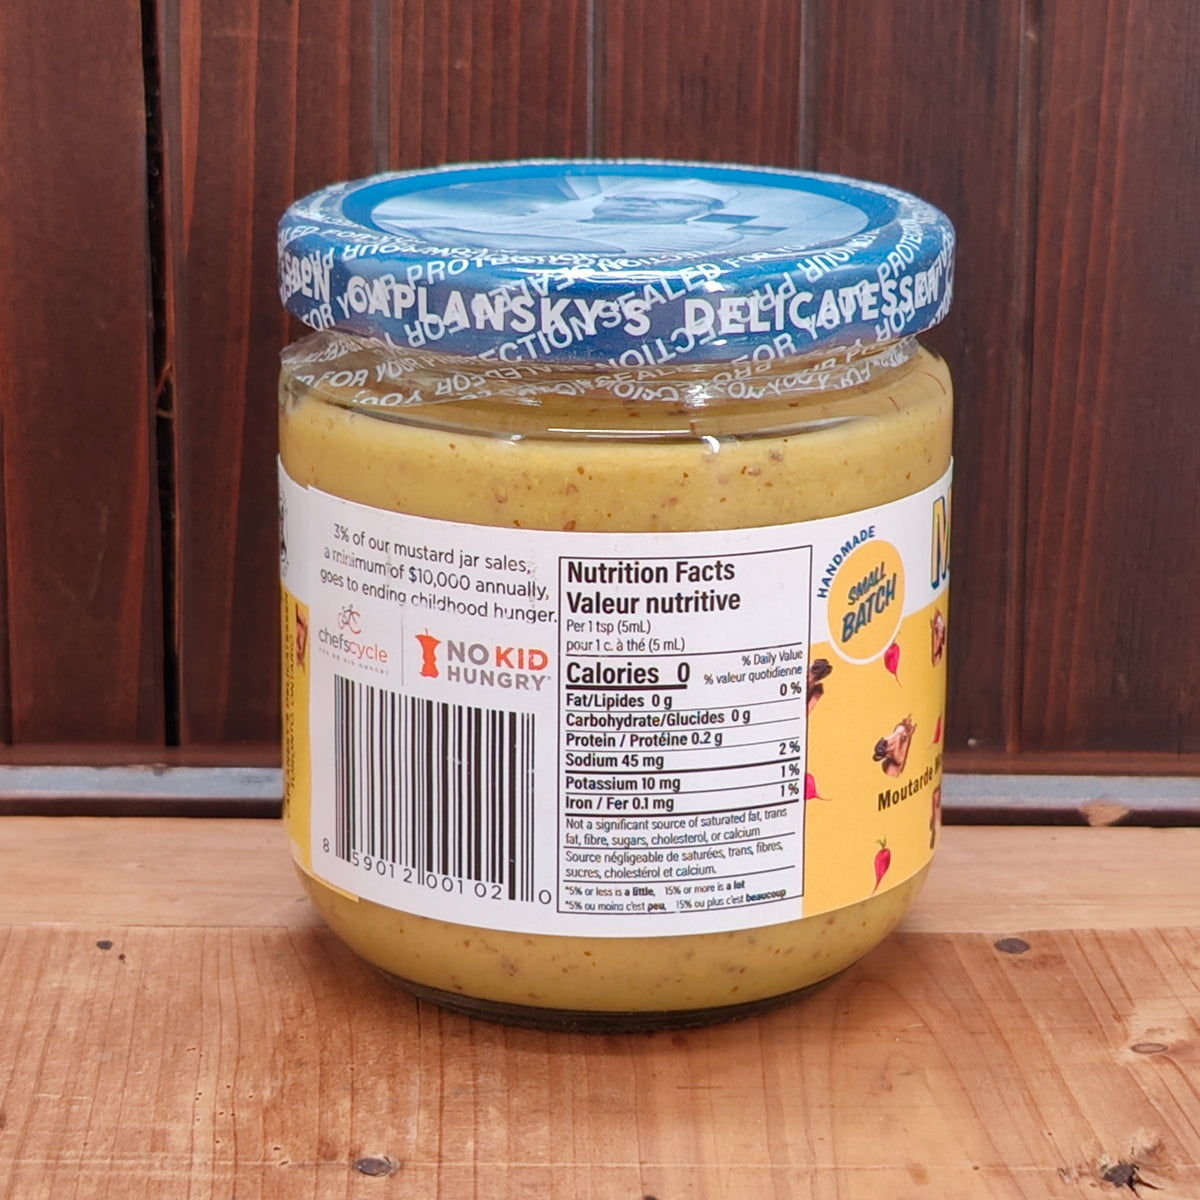 Caplansky's Delicatessen Horseradish Mustard - 235ml